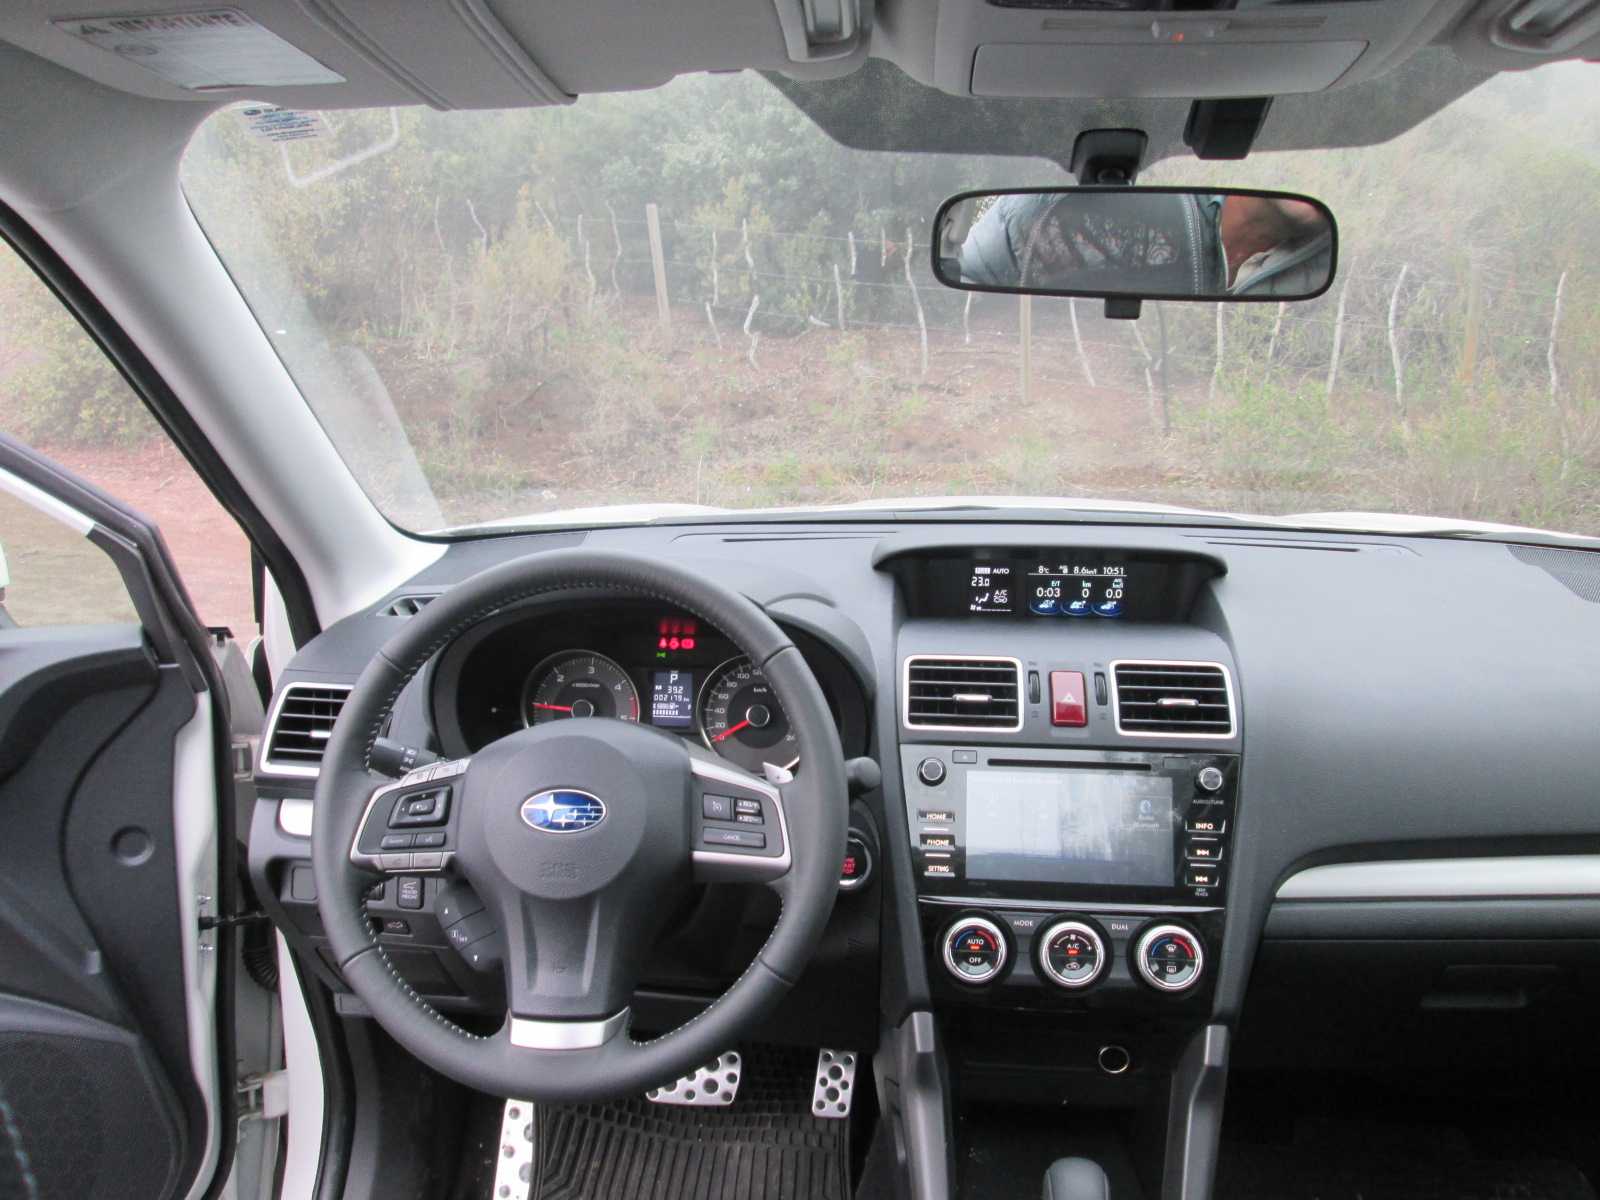 Subaru Forester 2.0D Limited Sport 2016 Test Drive Rutamotor (28)